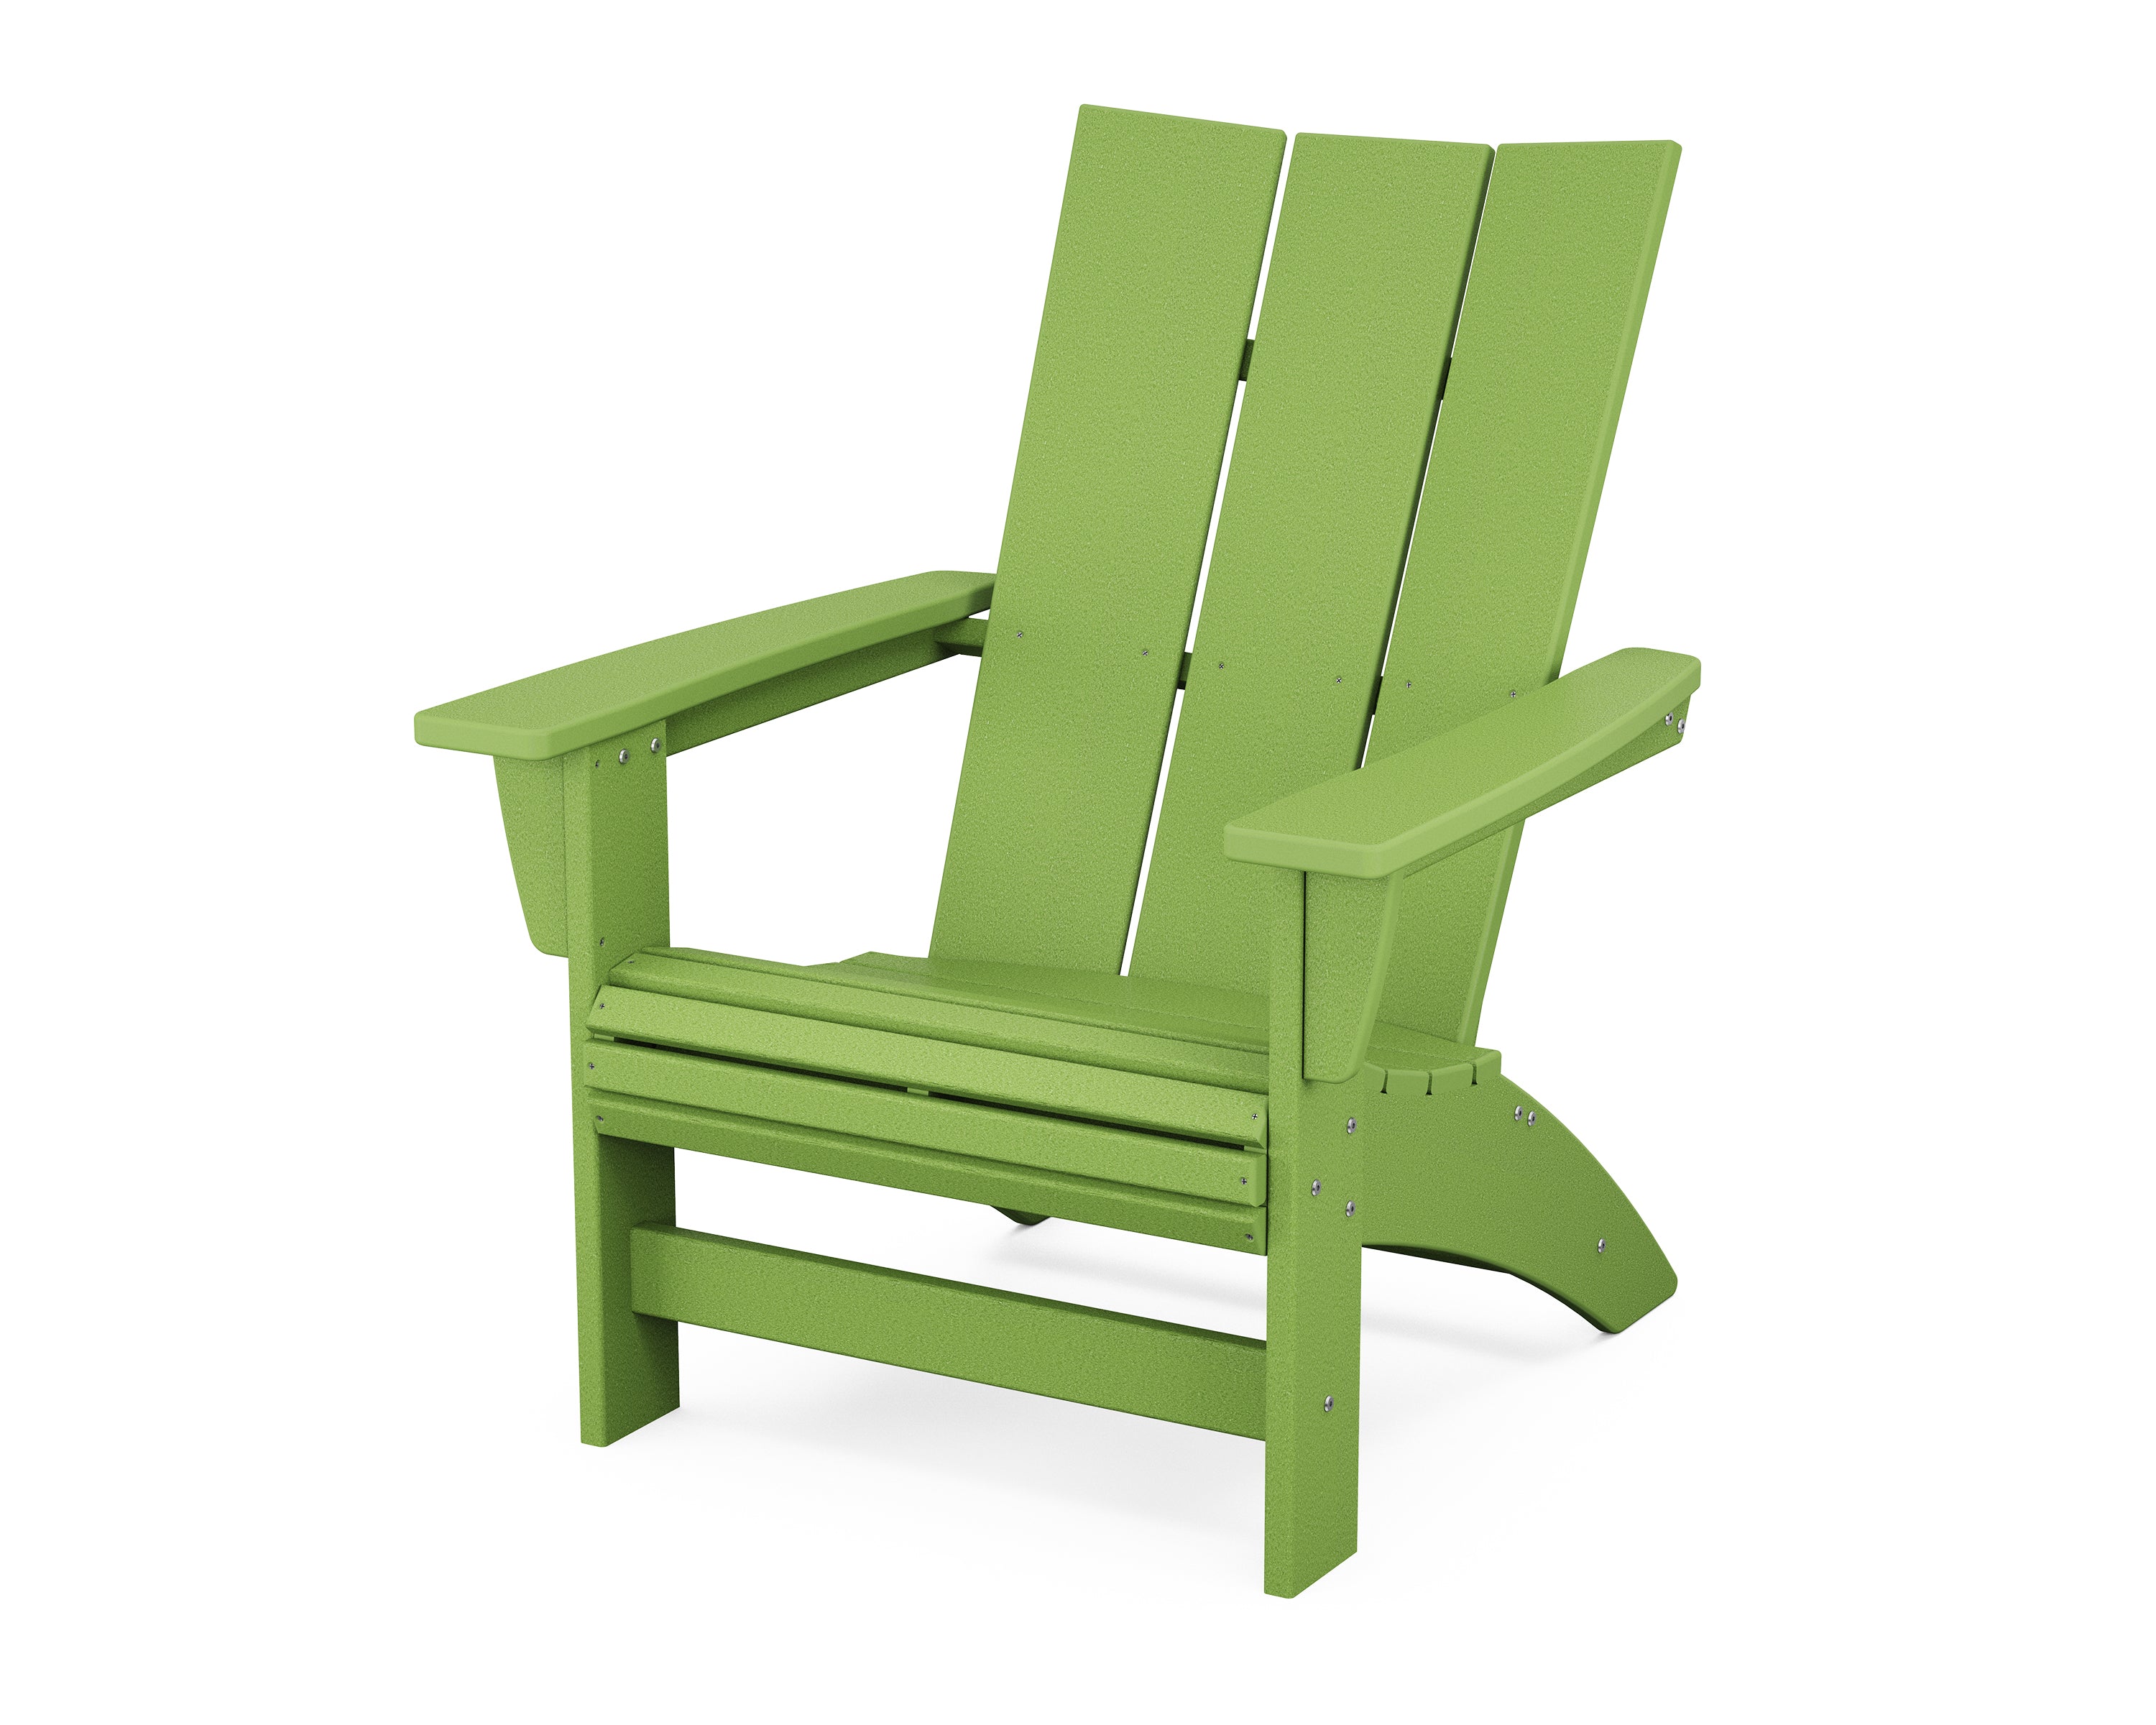 POLYWOOD Modern Grand Adirondack Chair in Lime